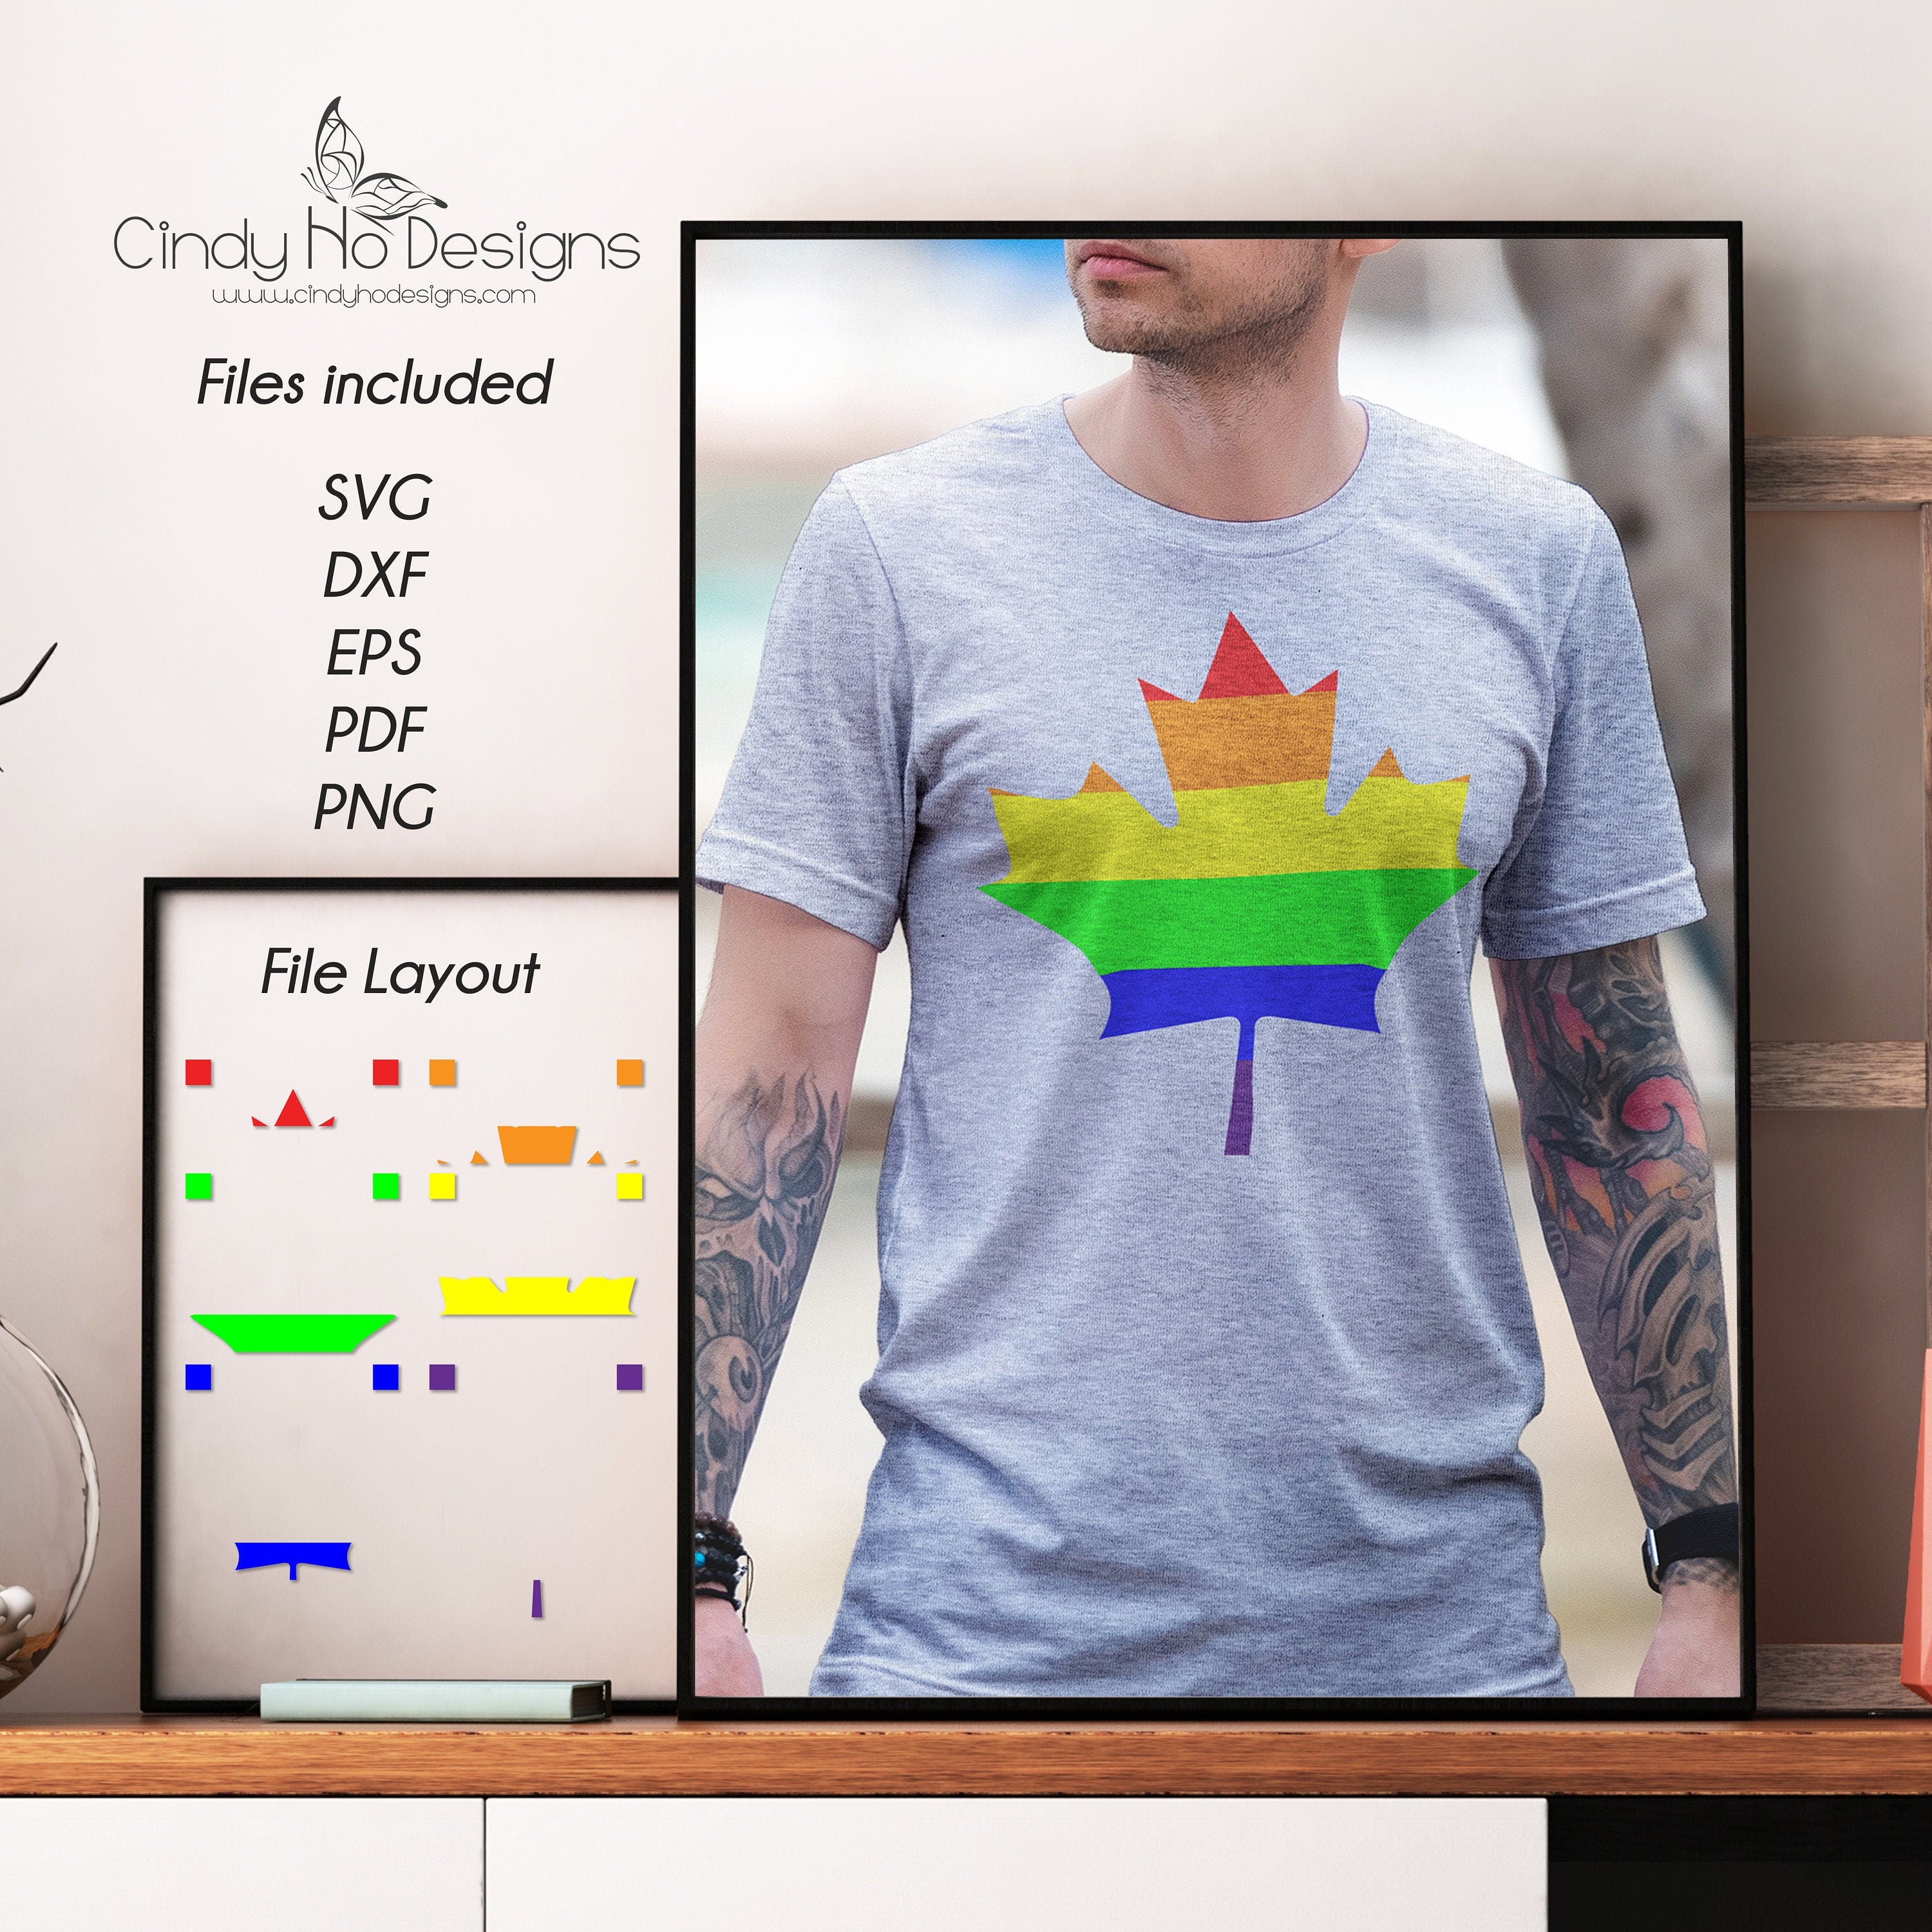 Canada Maple Leaf Flag T-shirt Design Vector Download